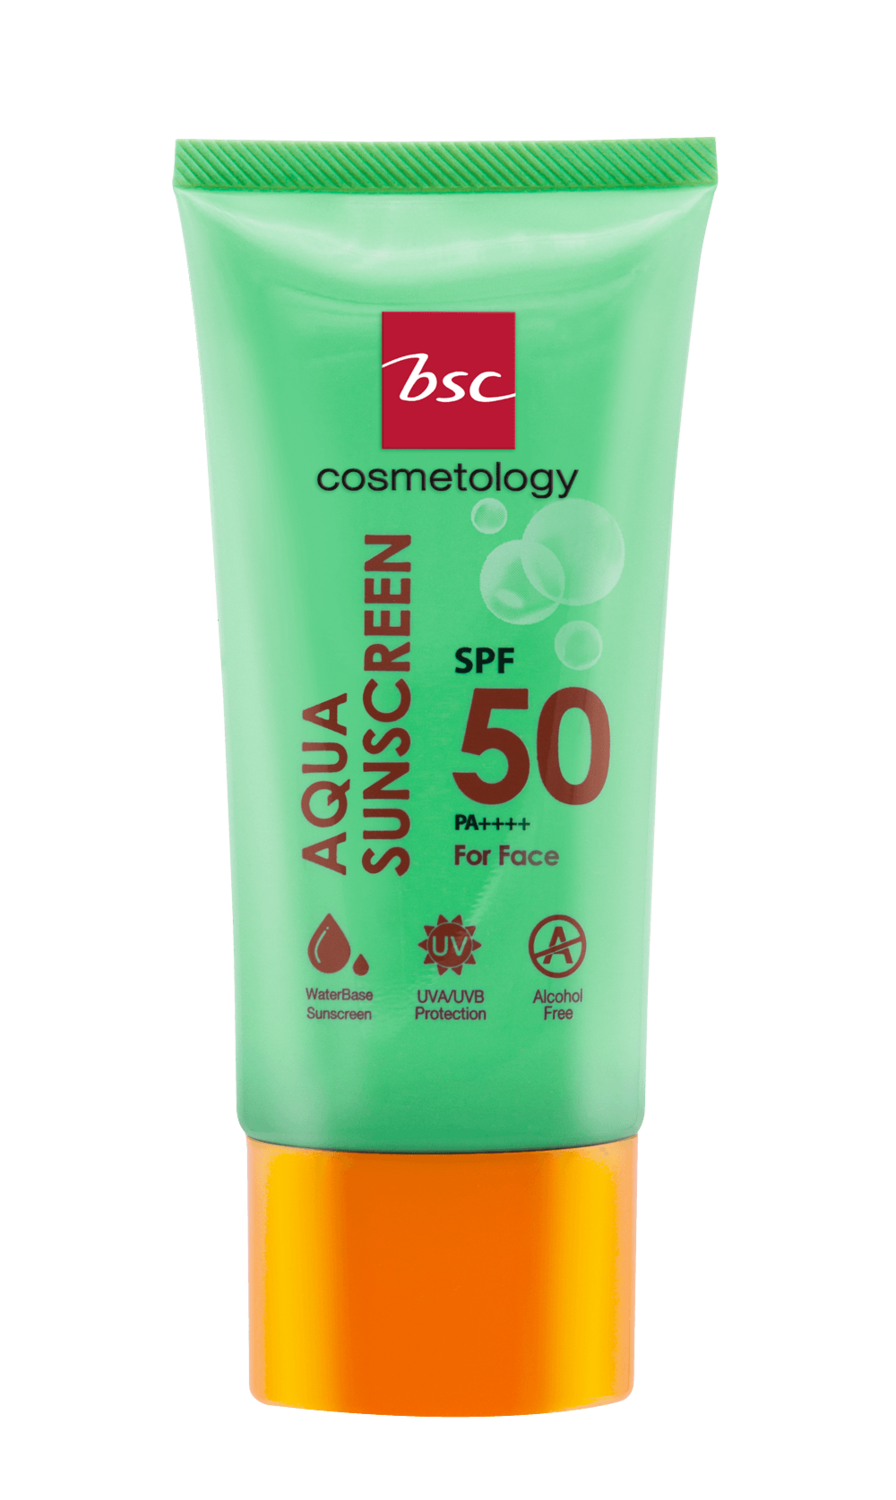 BSC Aqua Sunscreen SPF50 PA+++